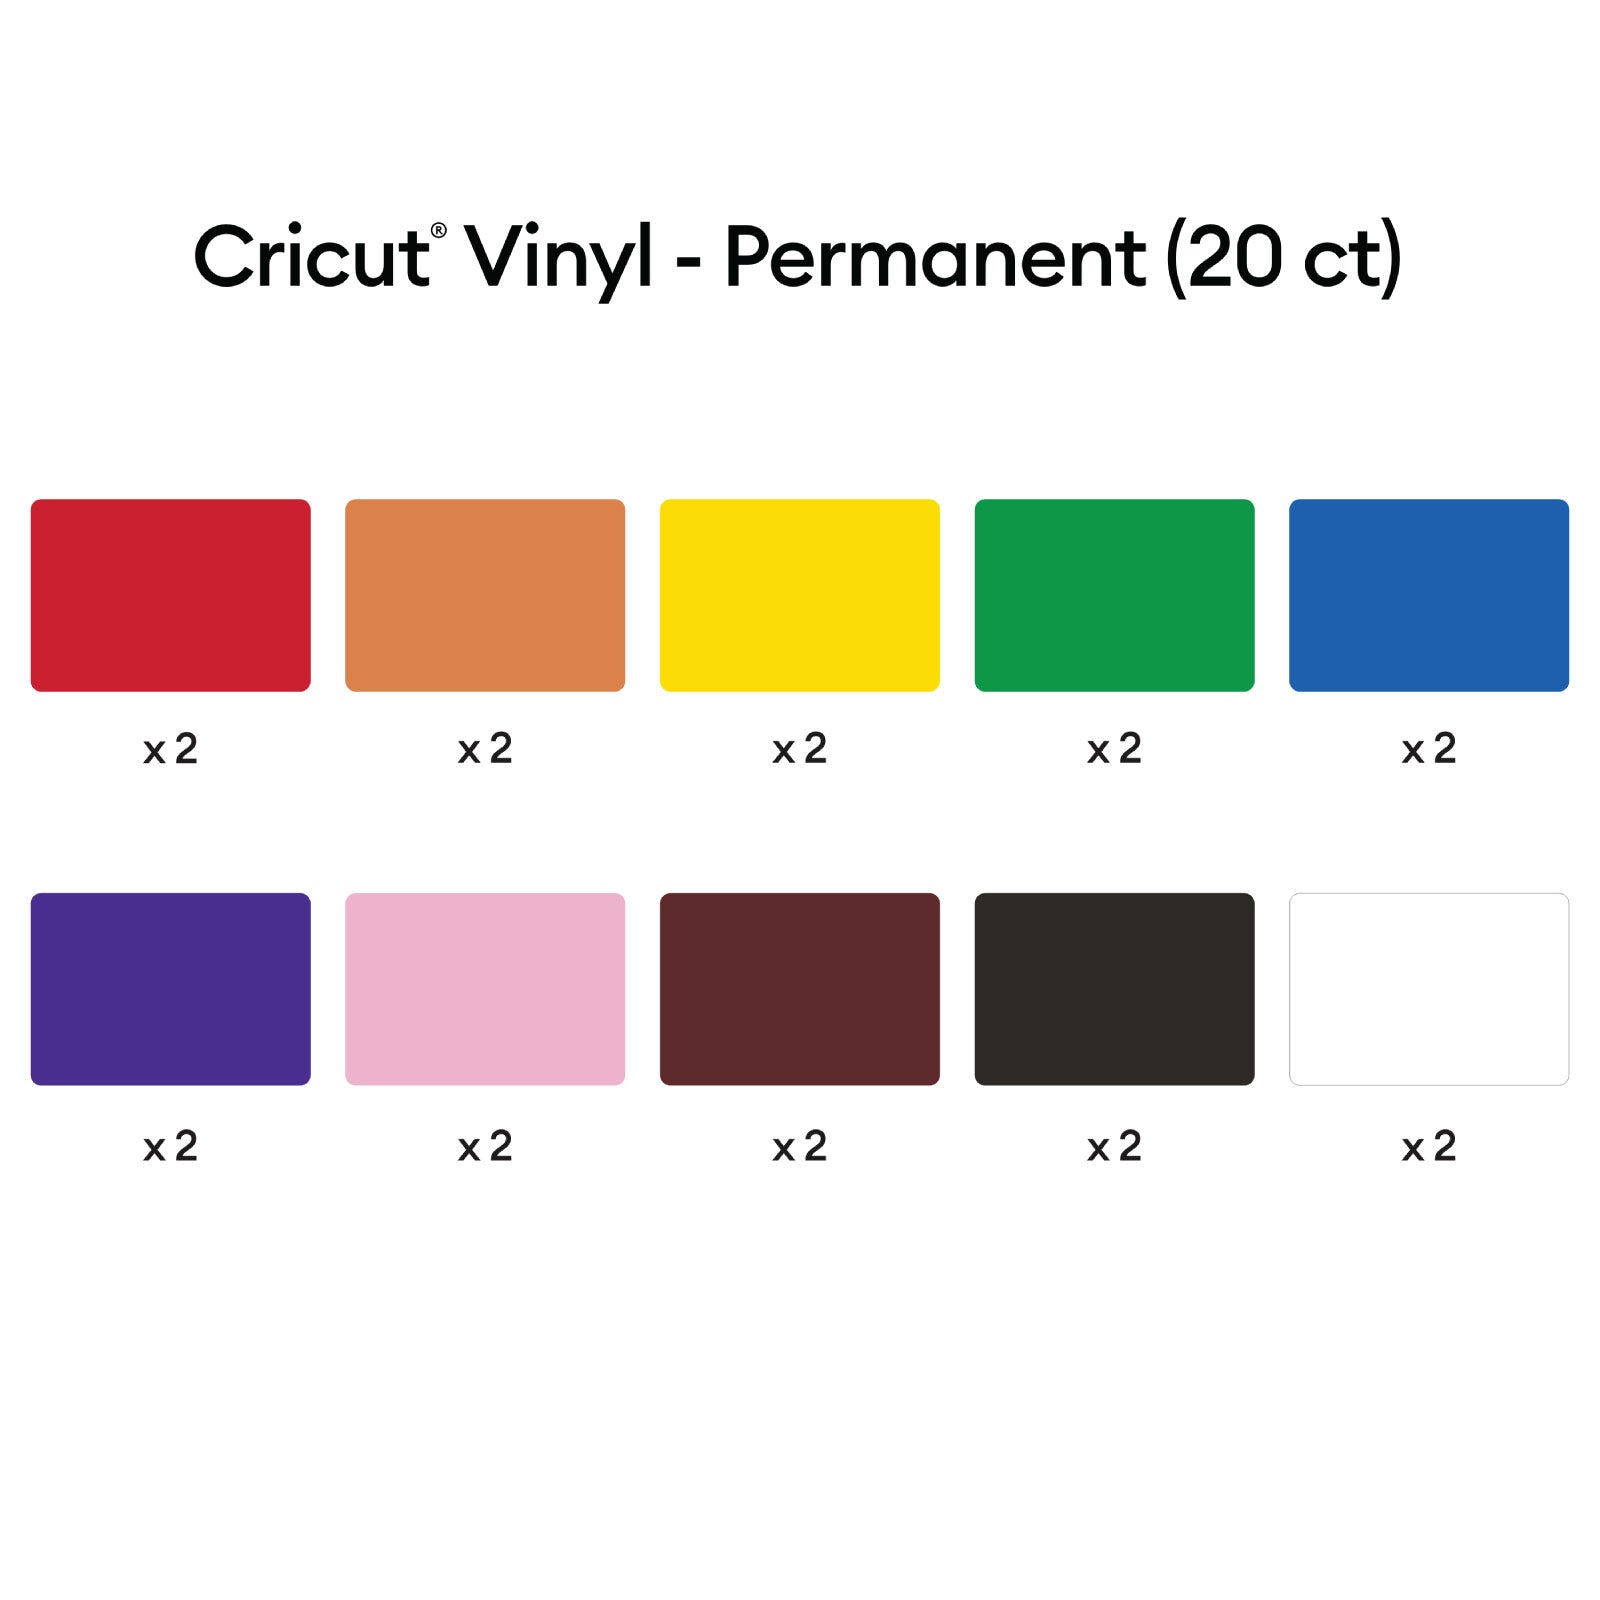 Cricut Vinyl, Rainbow Sampler - Permanent 20 ct